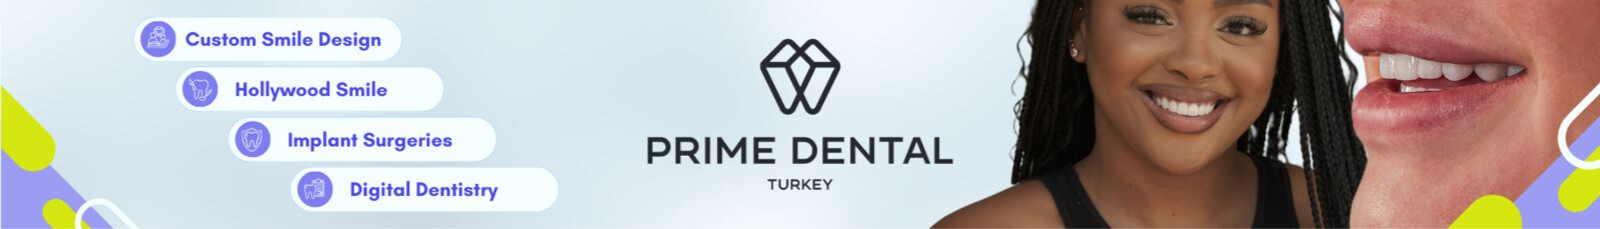 Prime Dental Turkey - Cover Photo